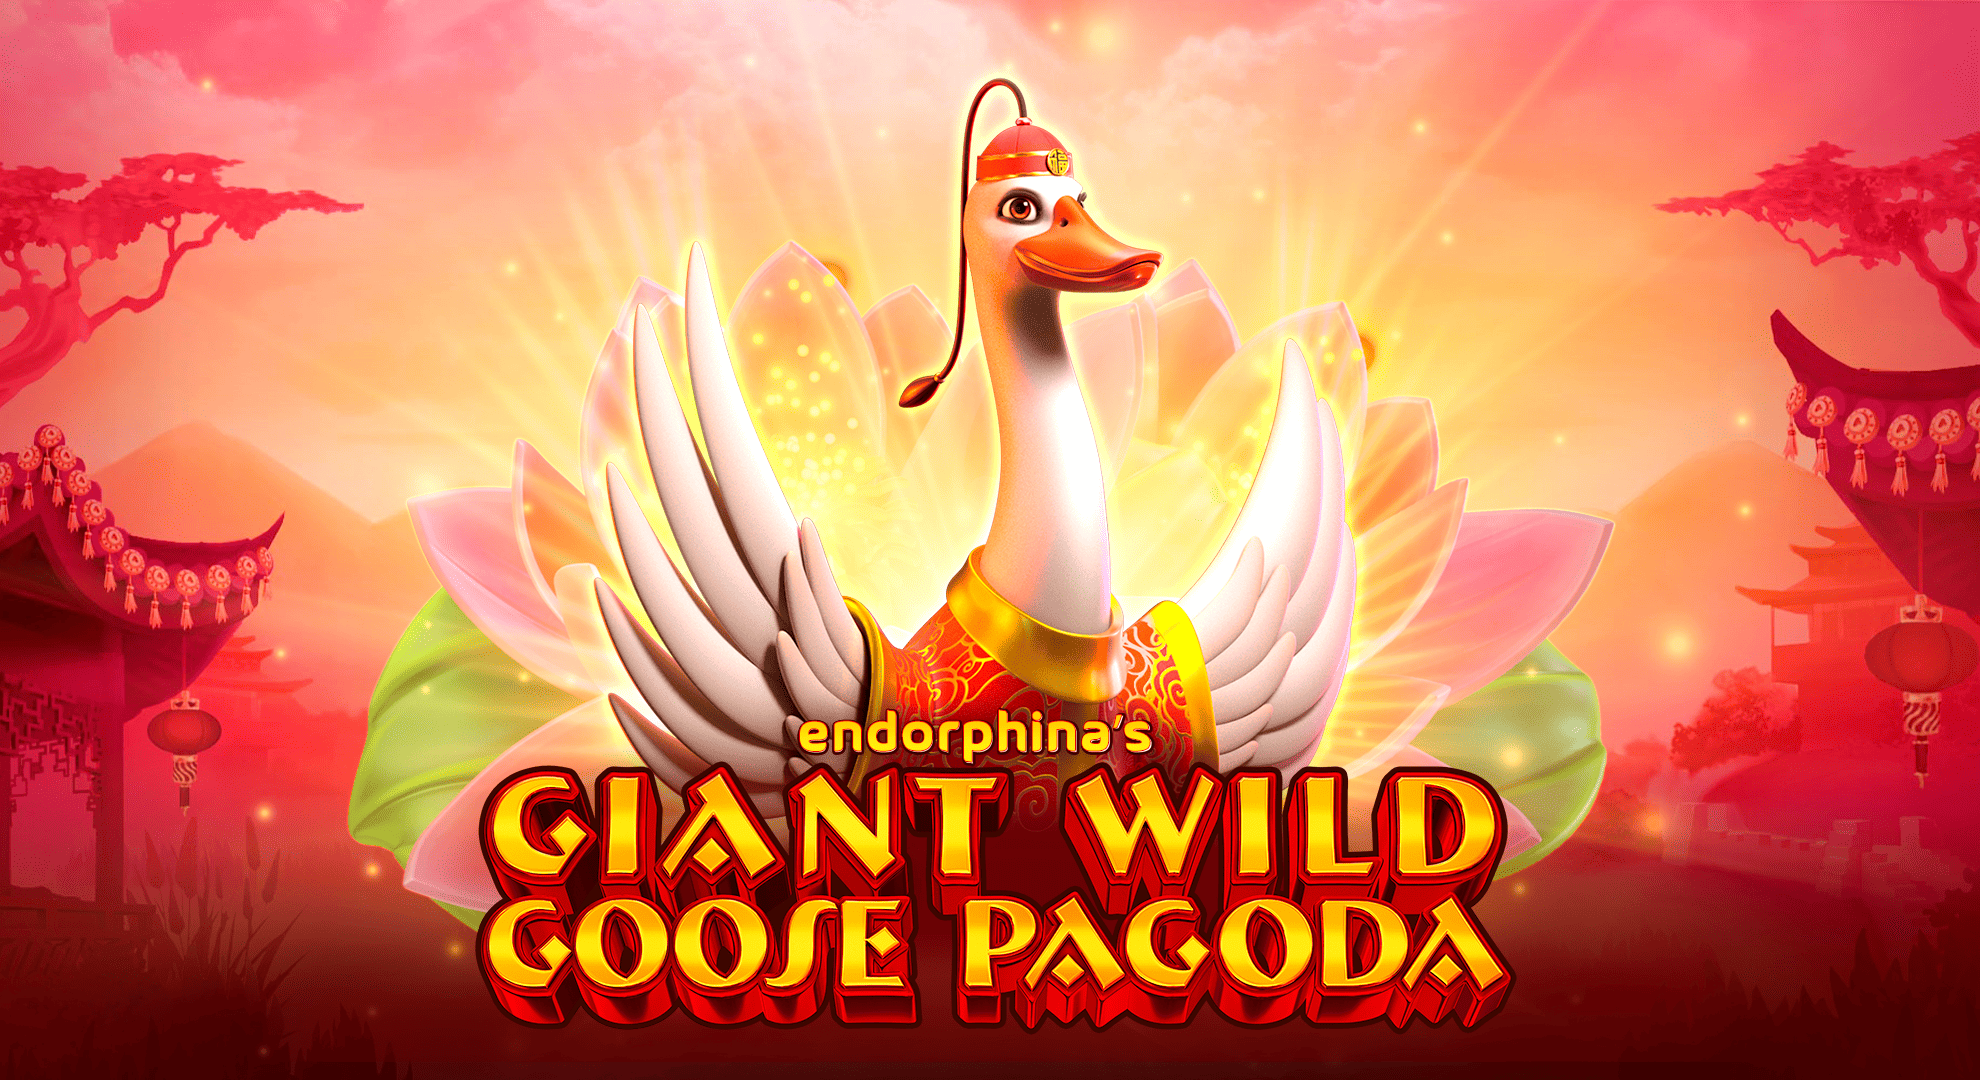 <br />
Giant Wild Goose Pagoda<br />
